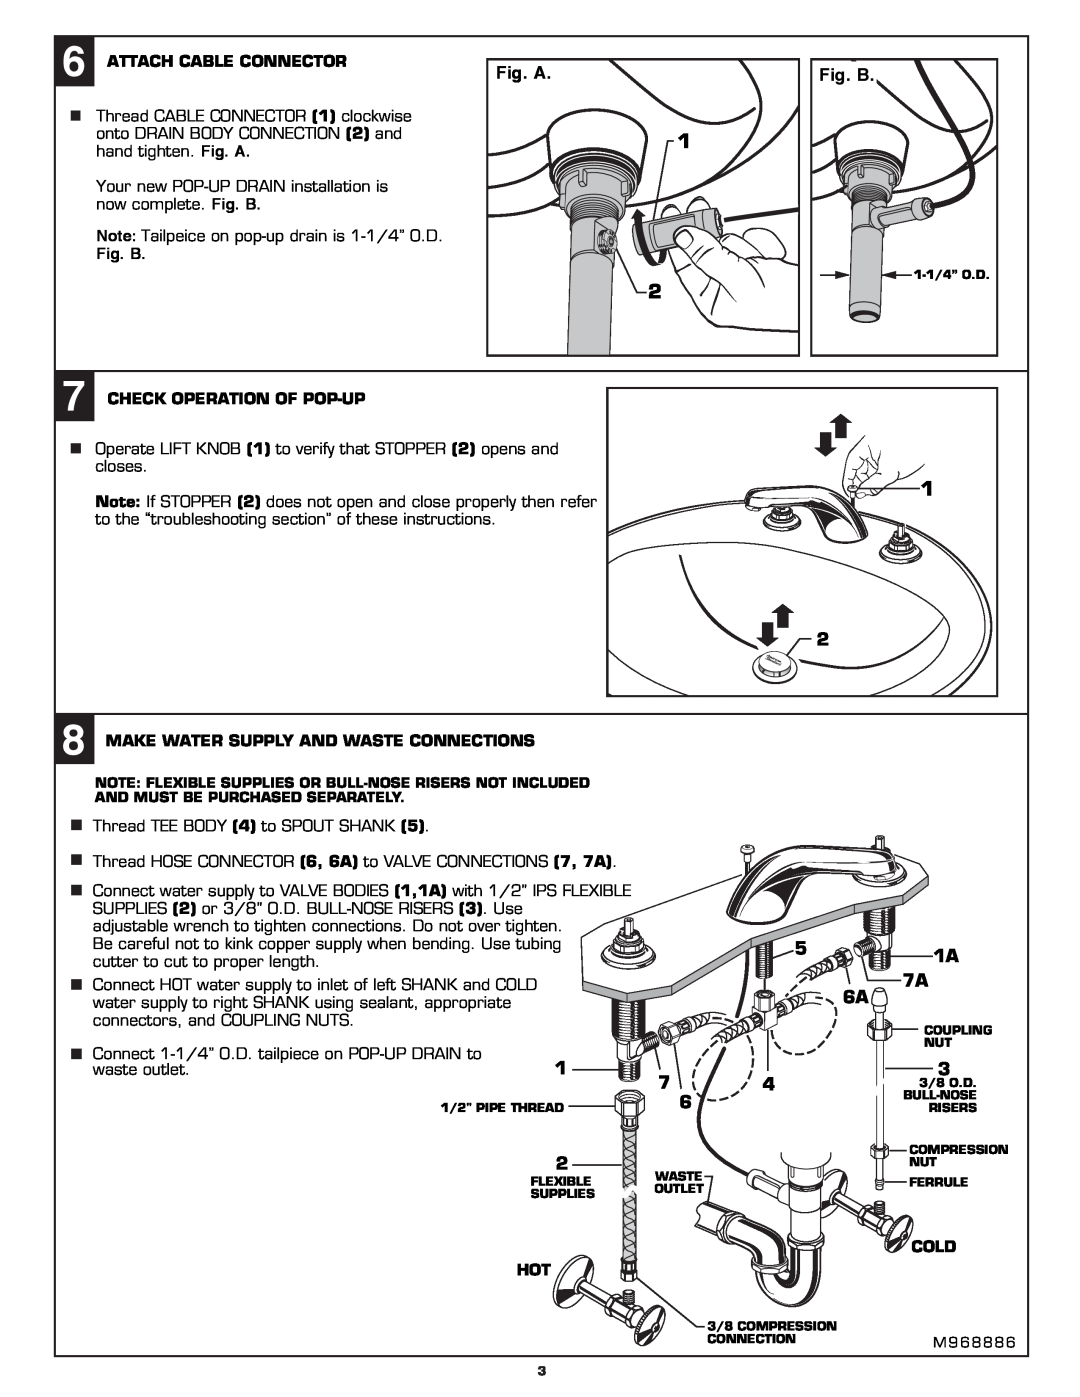 American Standard 3875-503, 3875-403 installation instructions Fig. A, Fig. B 